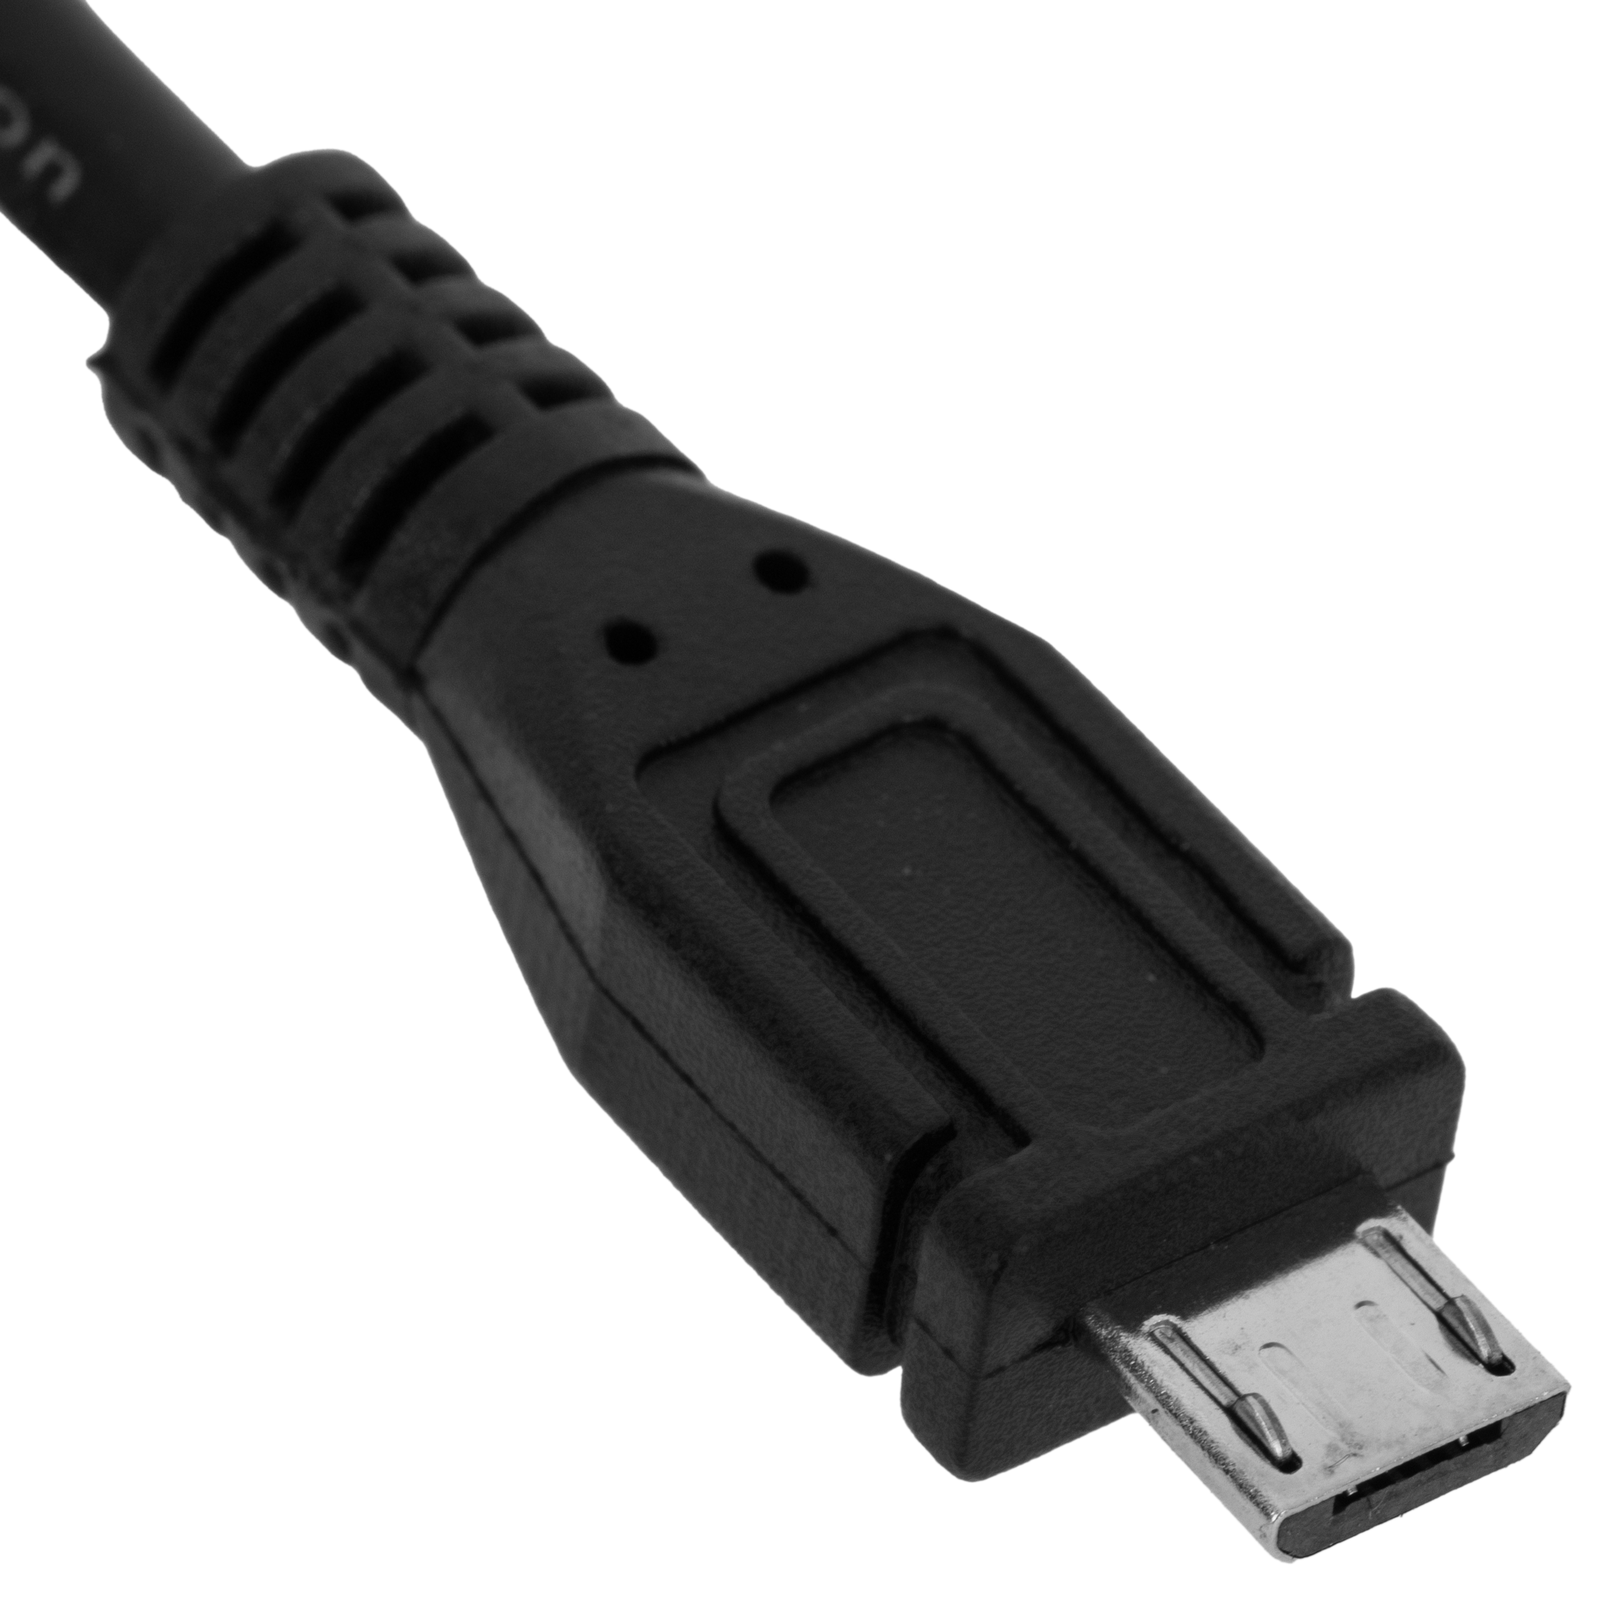 LÁMPARA DE MESA LITUANA BLACK LED + CARGADOR USB PARA IPHONE Y